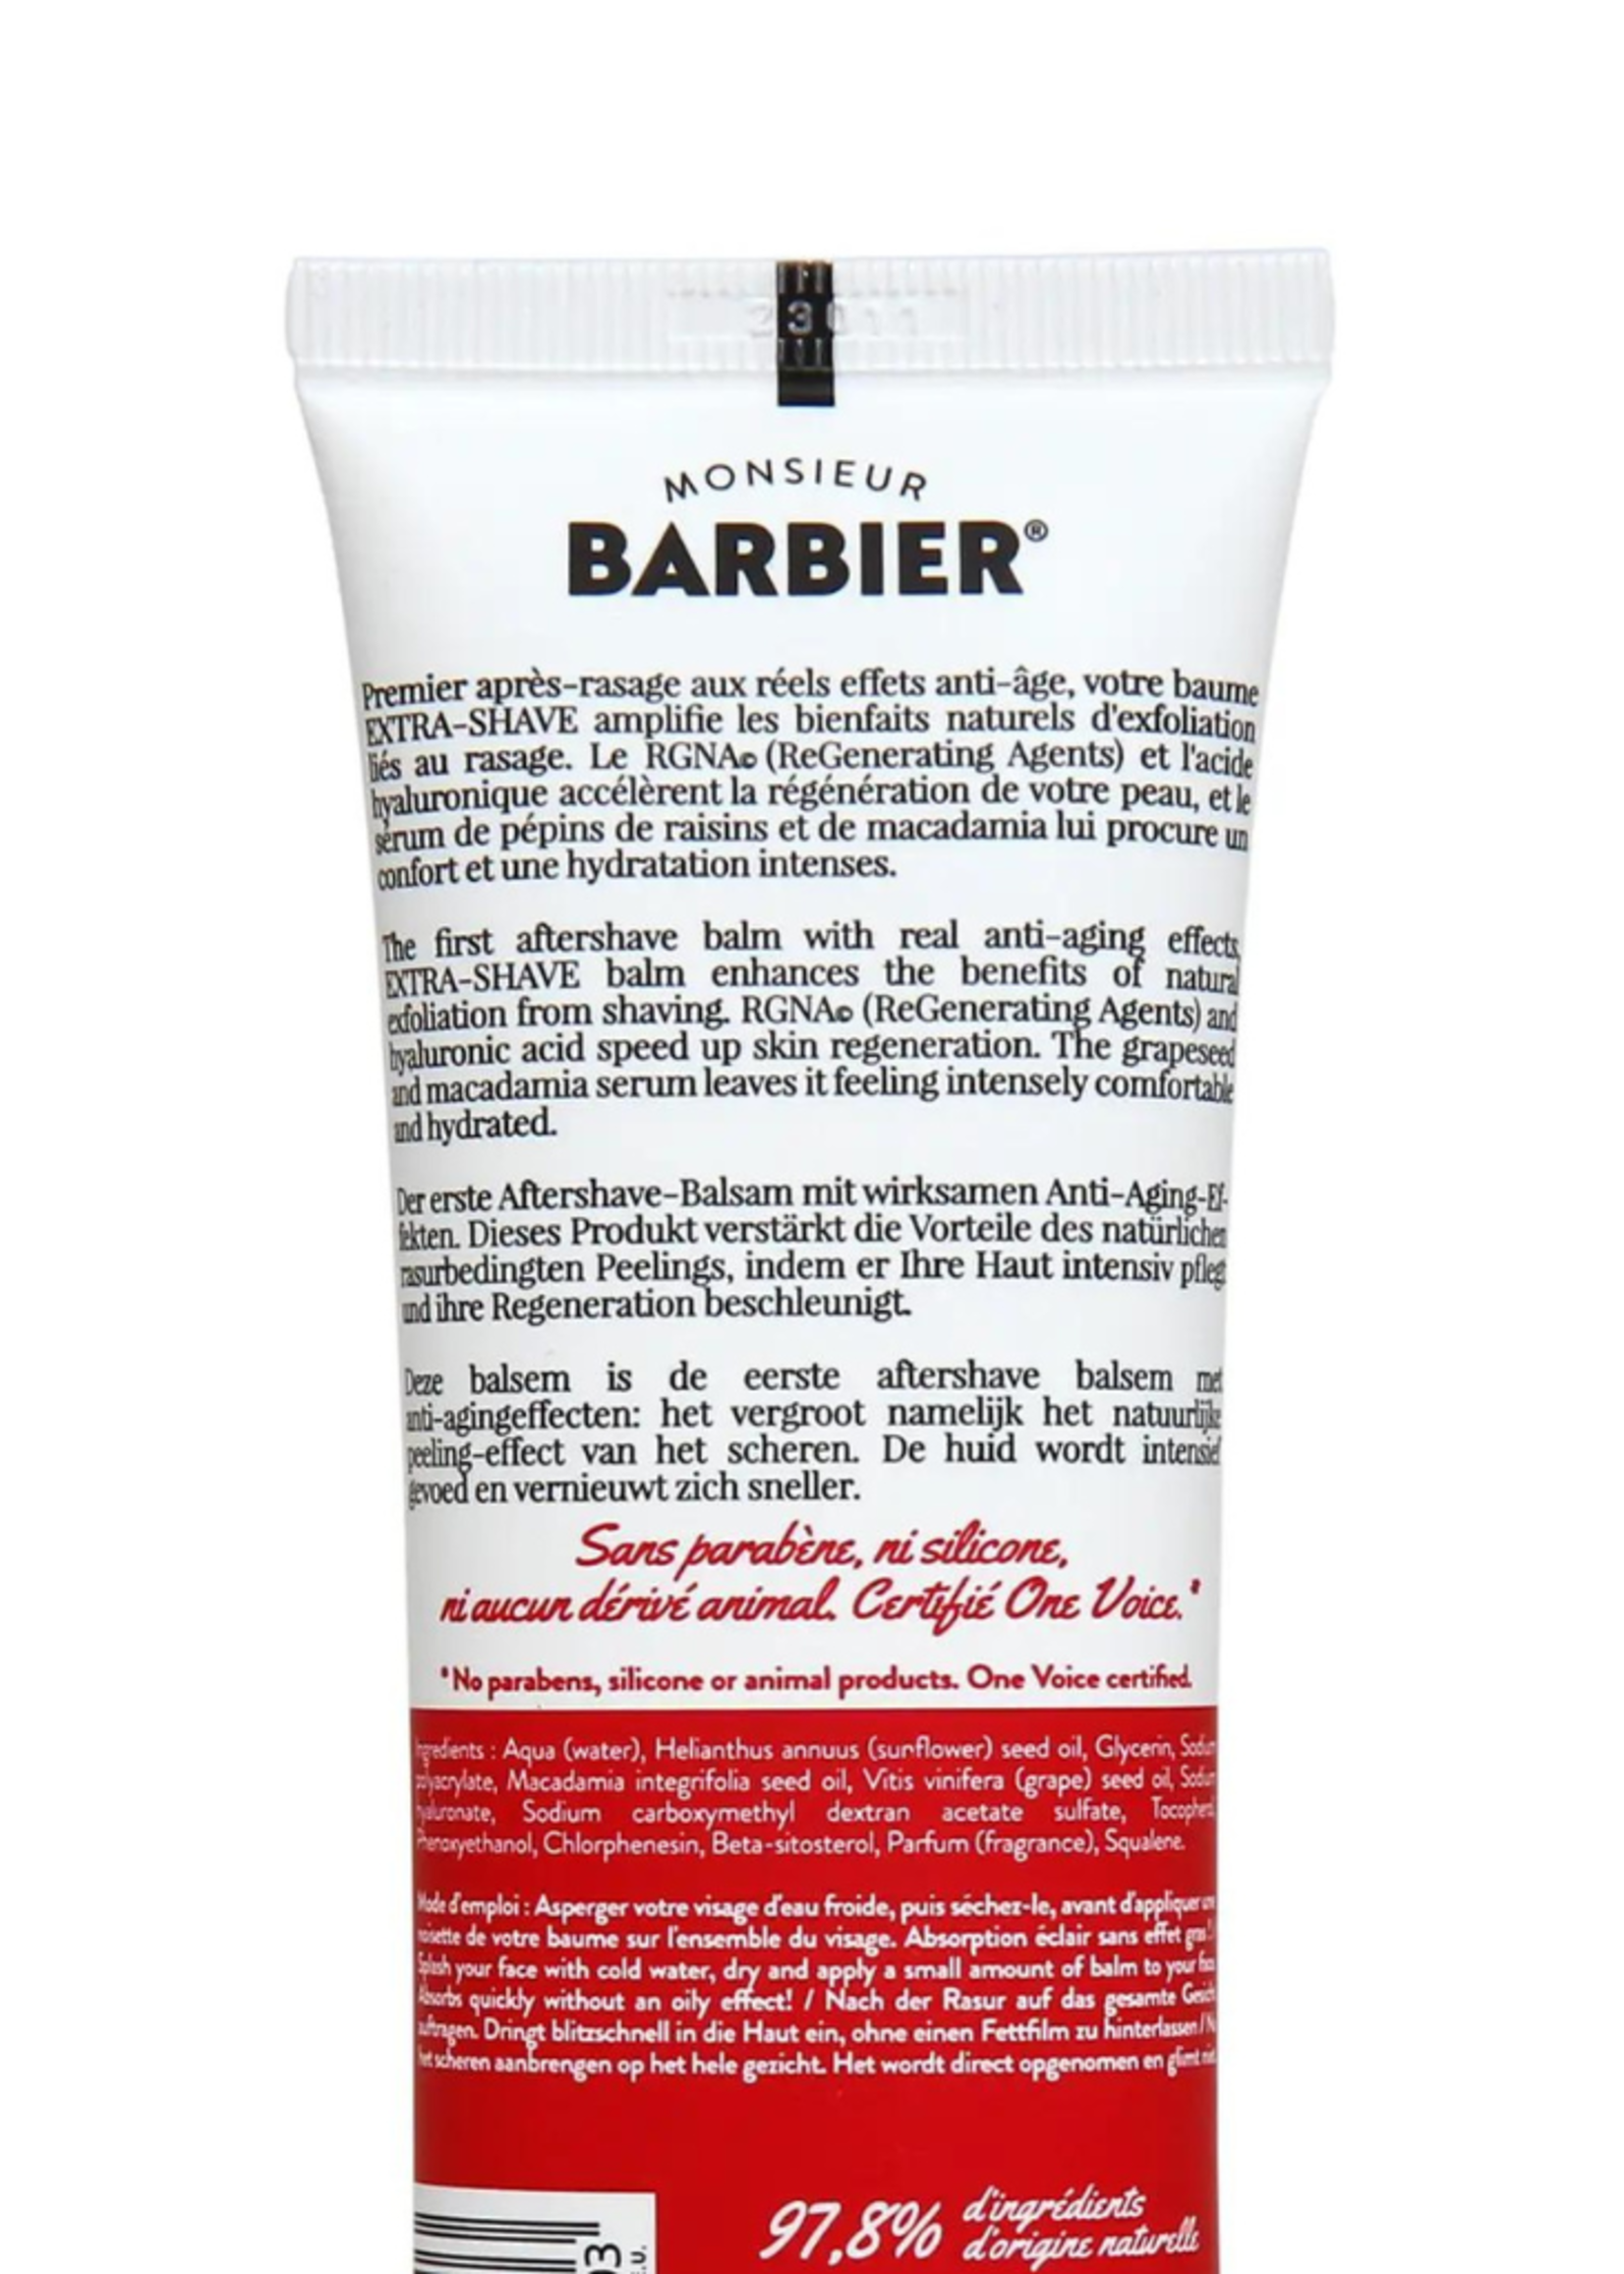 Monsieur Barbier Monsieur Barbier - Extra-Shave - Anti-Aging After-Shave Balm